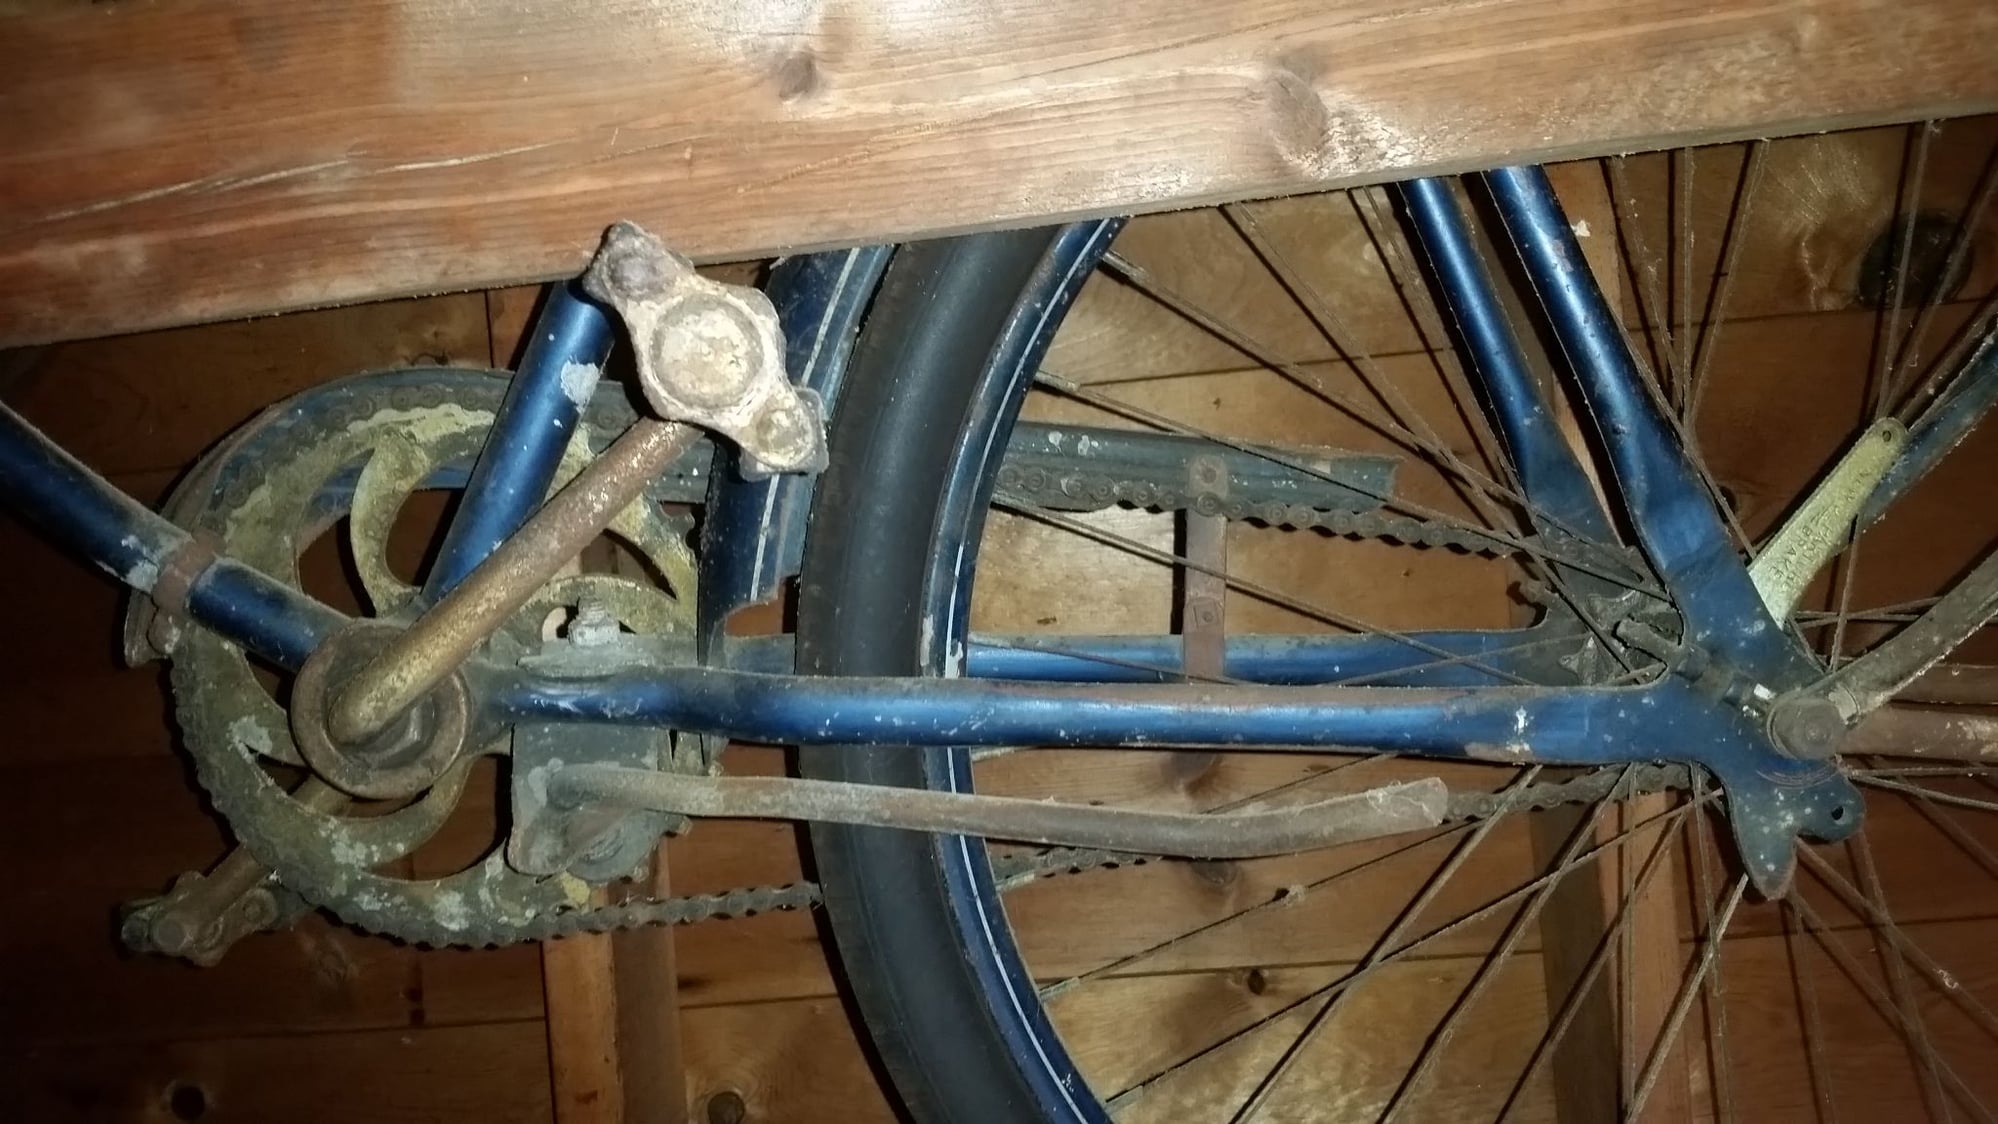 very old bike